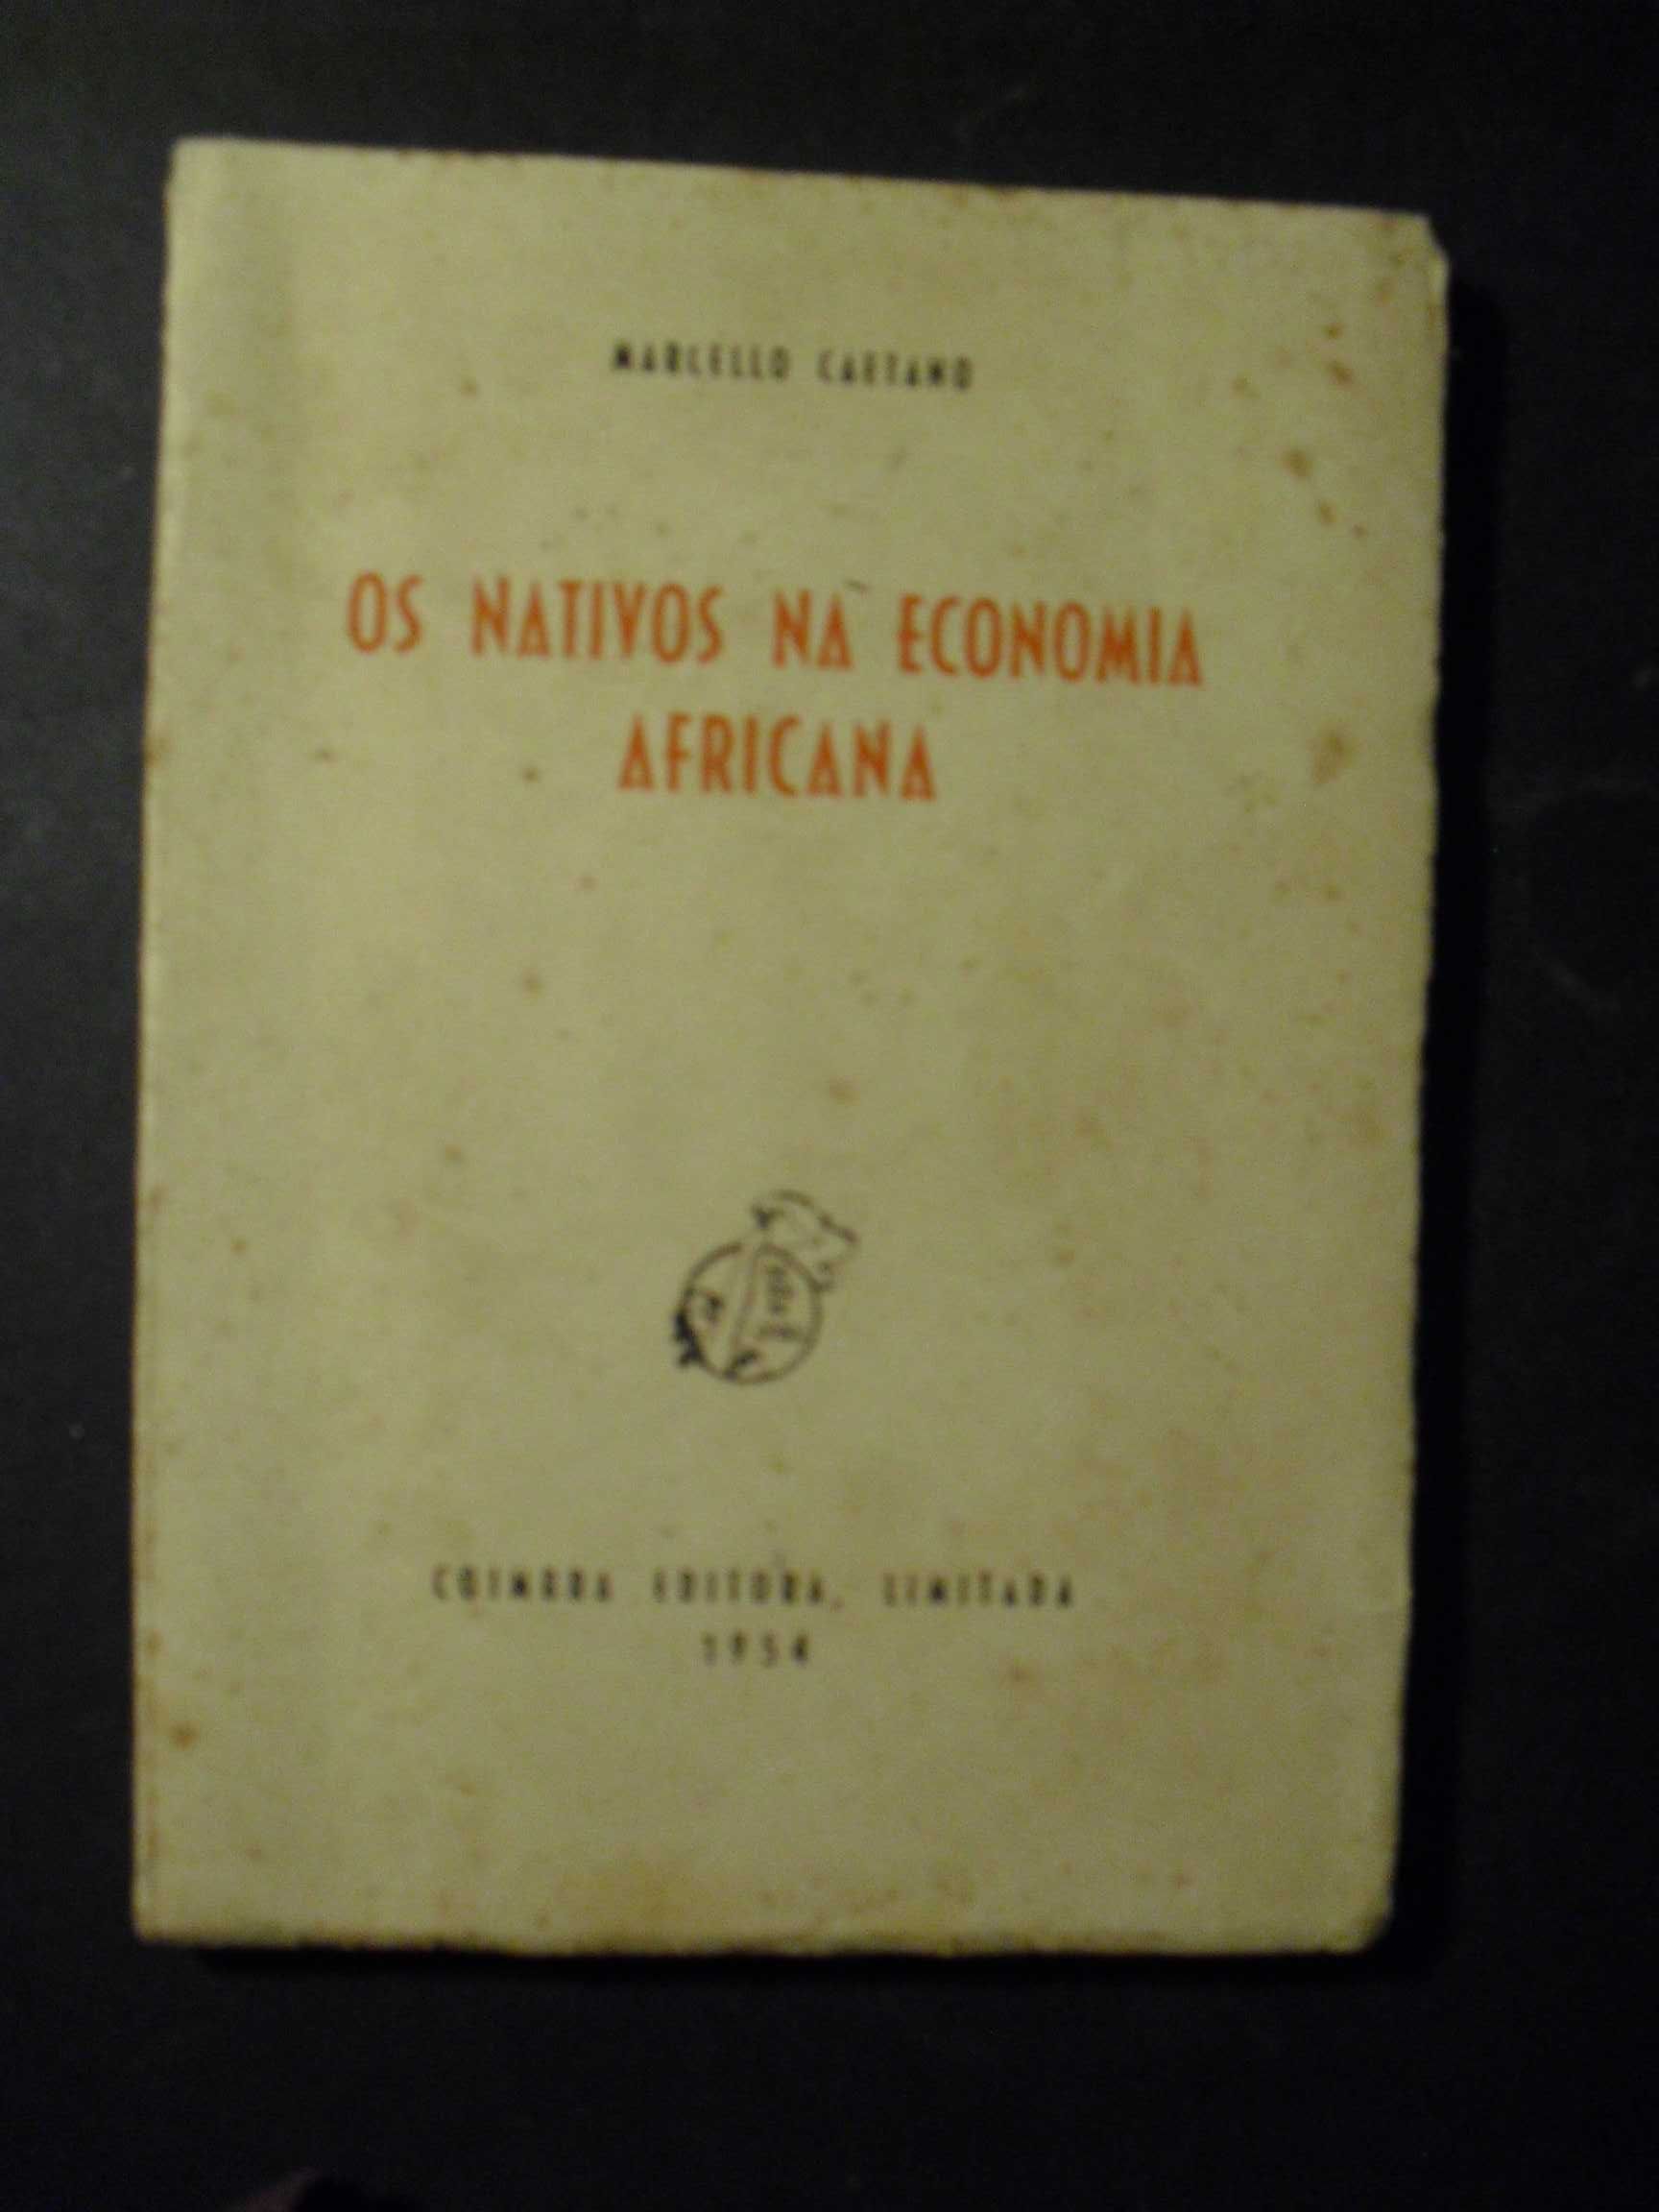 Caetano (Marcelo);Os Nativos na Economia Africana